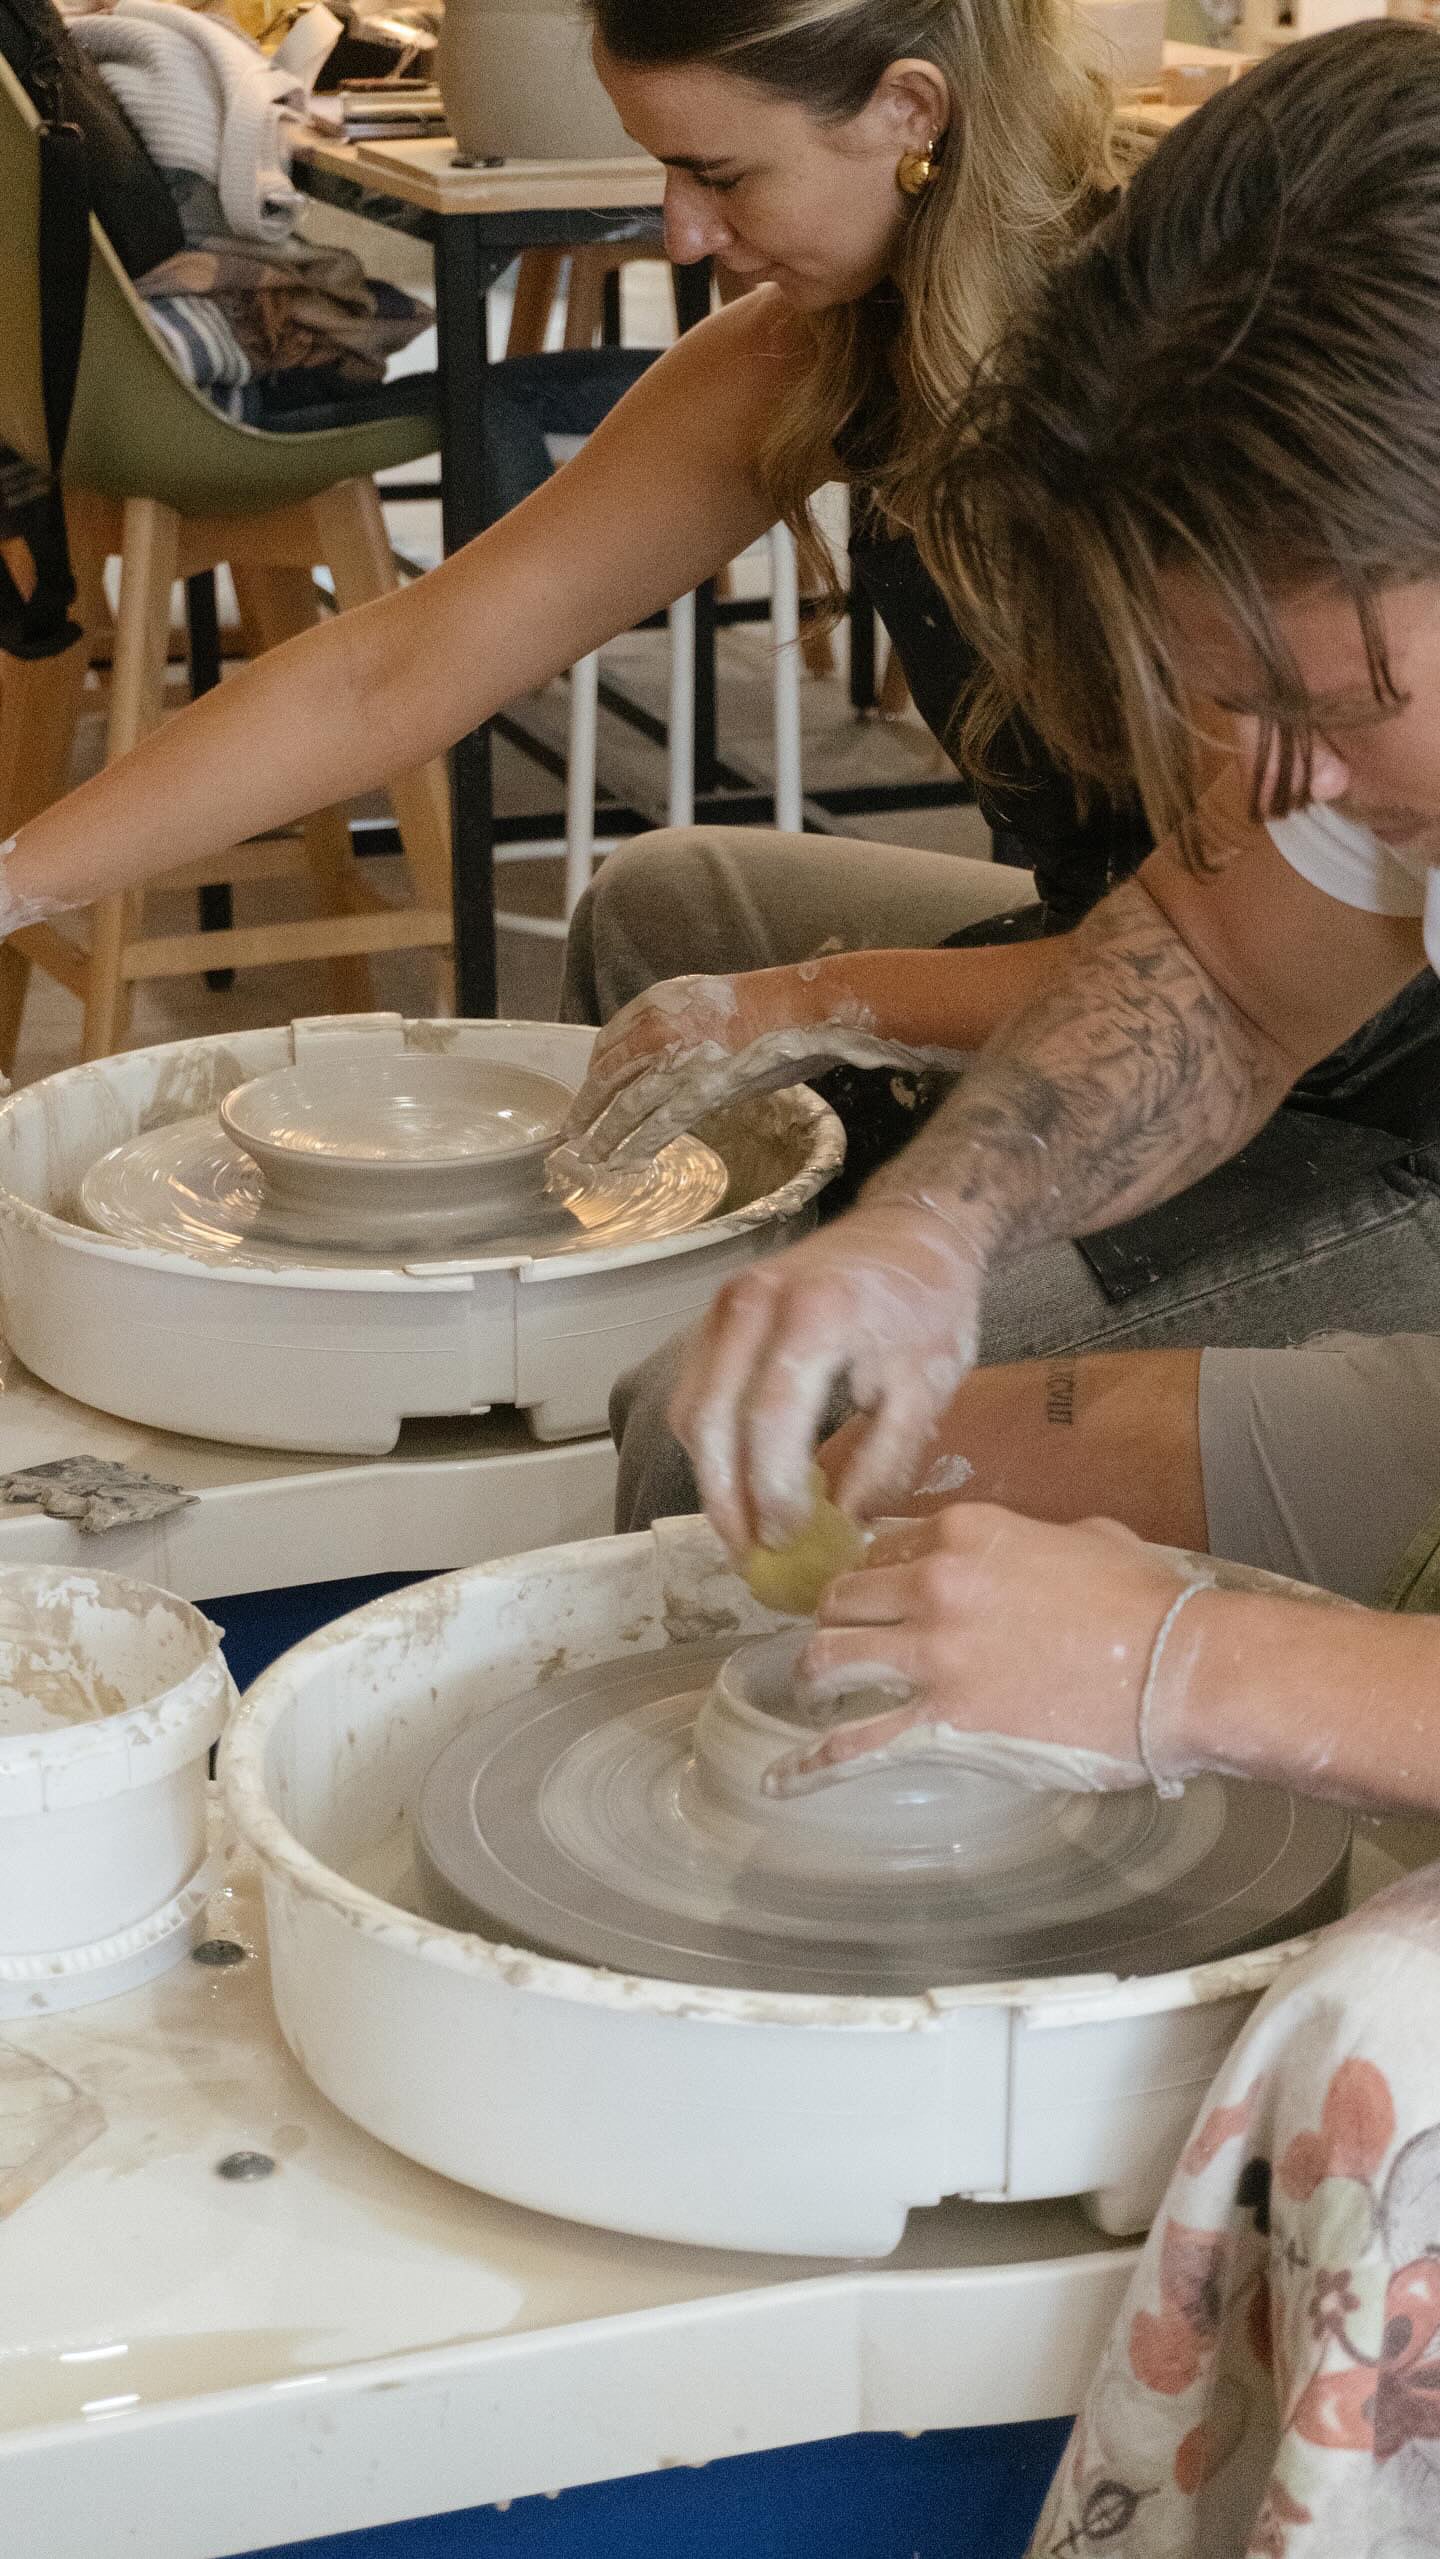 Ceramic Workshop "Pottery Wheel For Beginners" with Sara in Vila Nova de Gaia, Porto, Portugal by subcultours